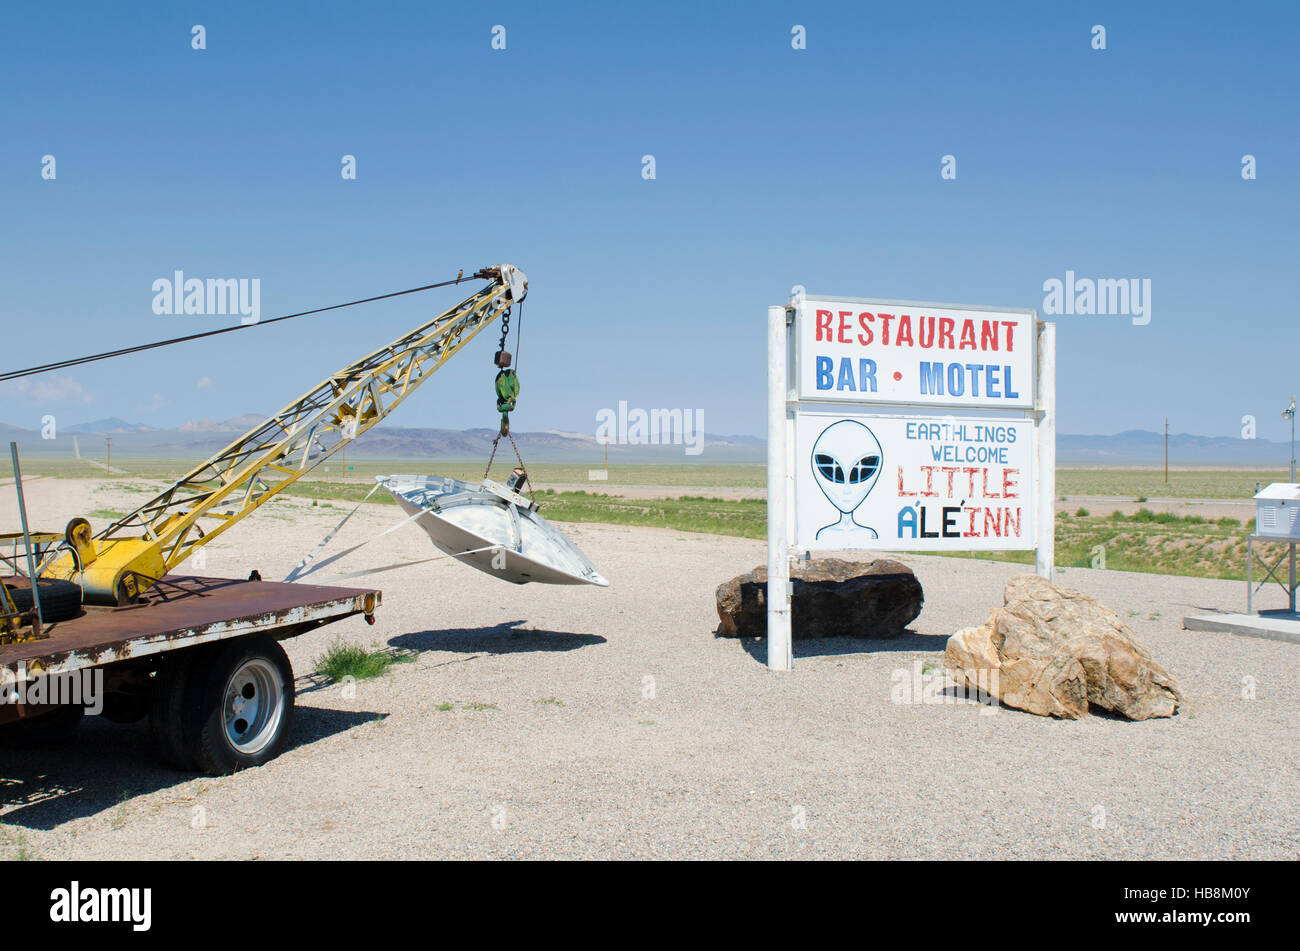 The Little Ale'Inn in Rachel Nevada outside of Area 51. Stock Photo